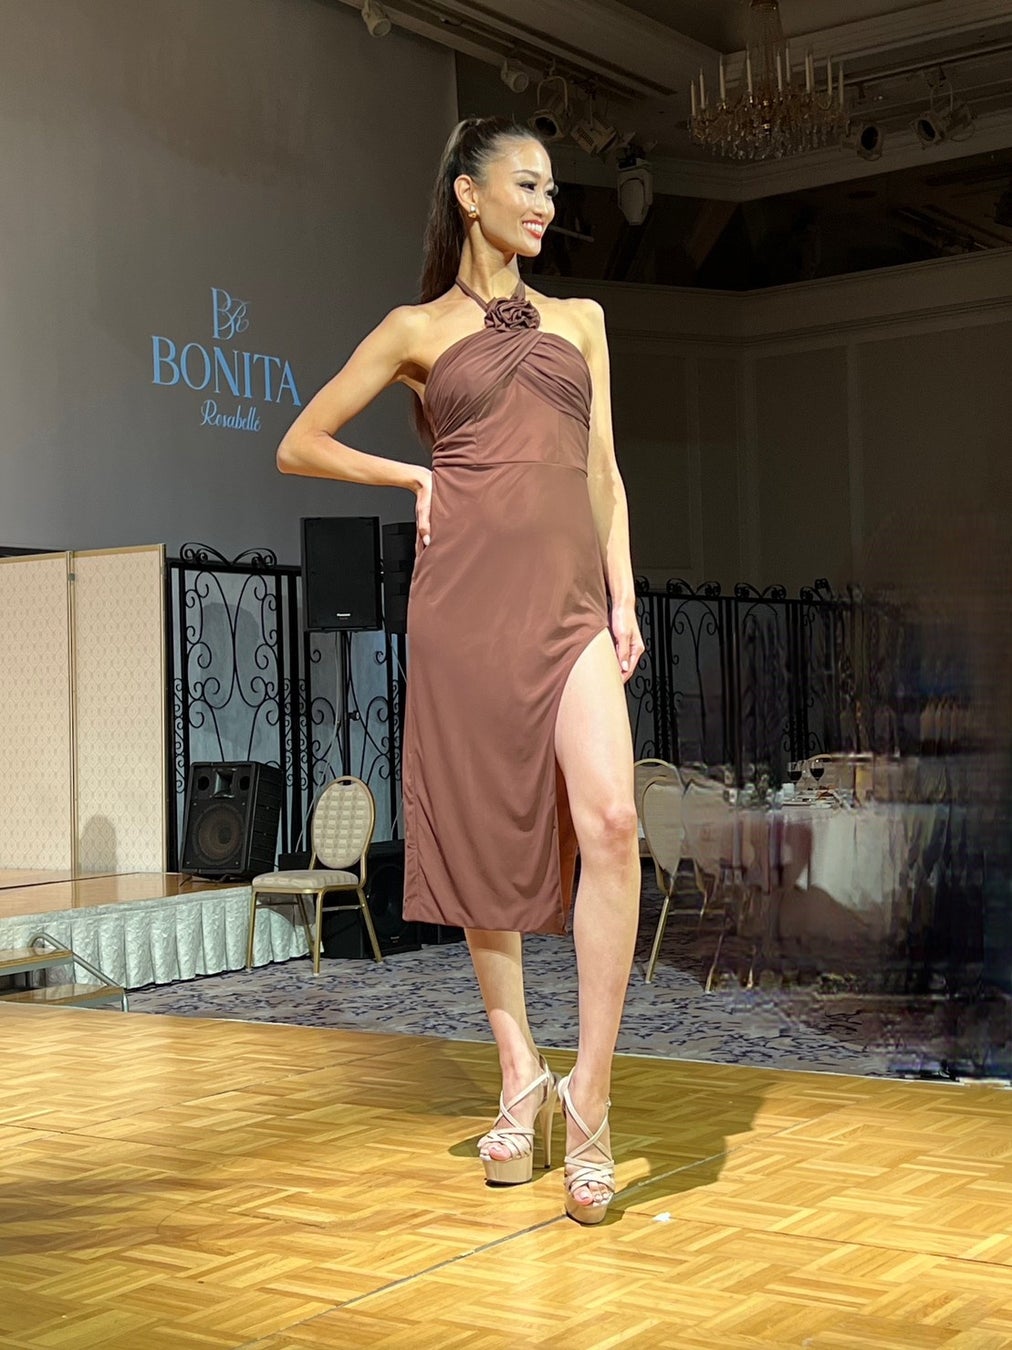 BONITA Rosabelle「ボニータロザリオ」がファッションショーを開催